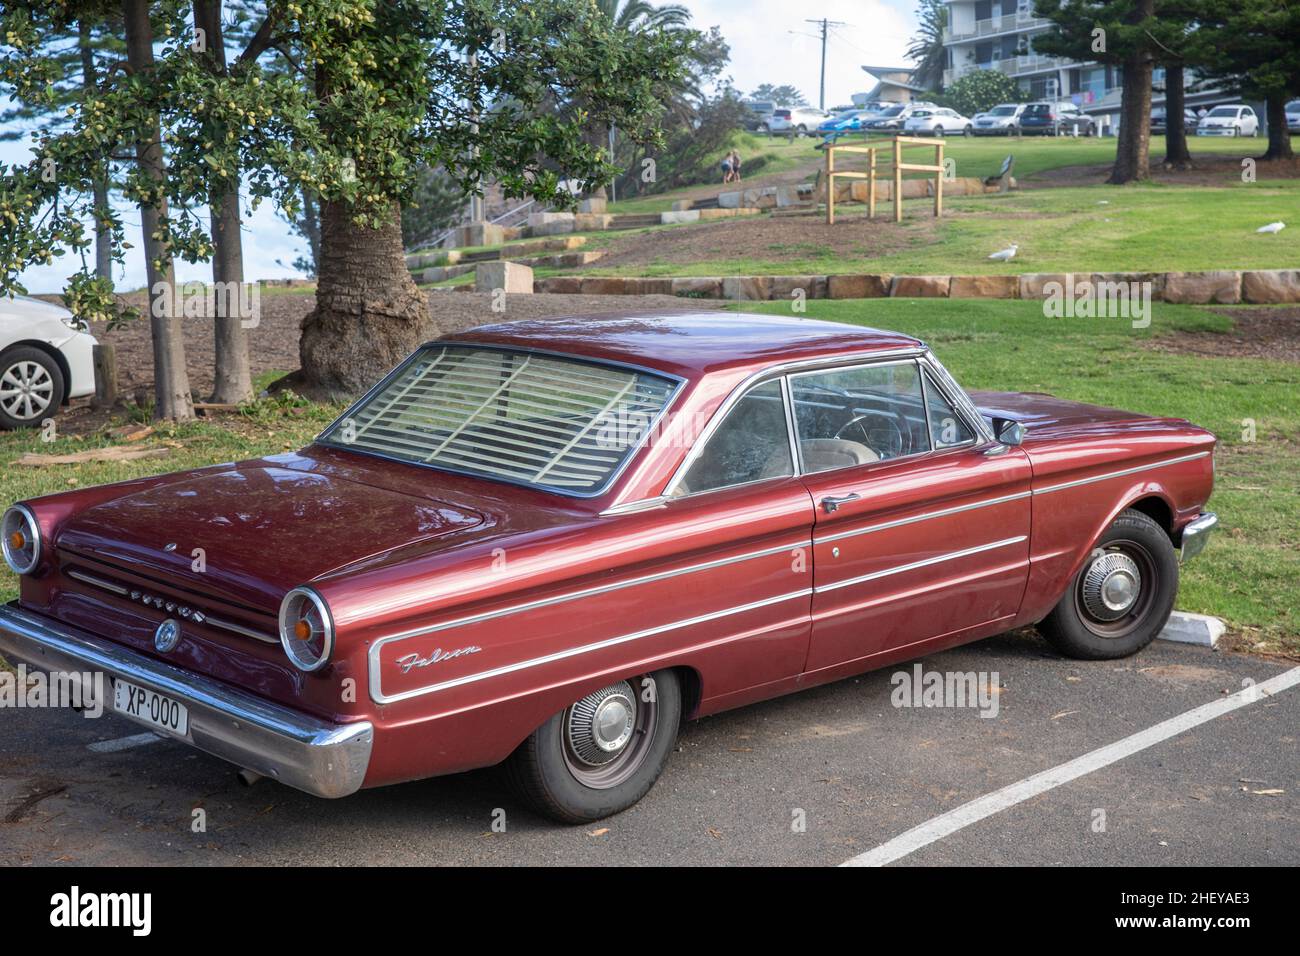 1966 Ford Falcon Futura, commonly named the Ford Futura by Ford Australia, parked at Avalon Beach,Sydney,Australia Stock Photo